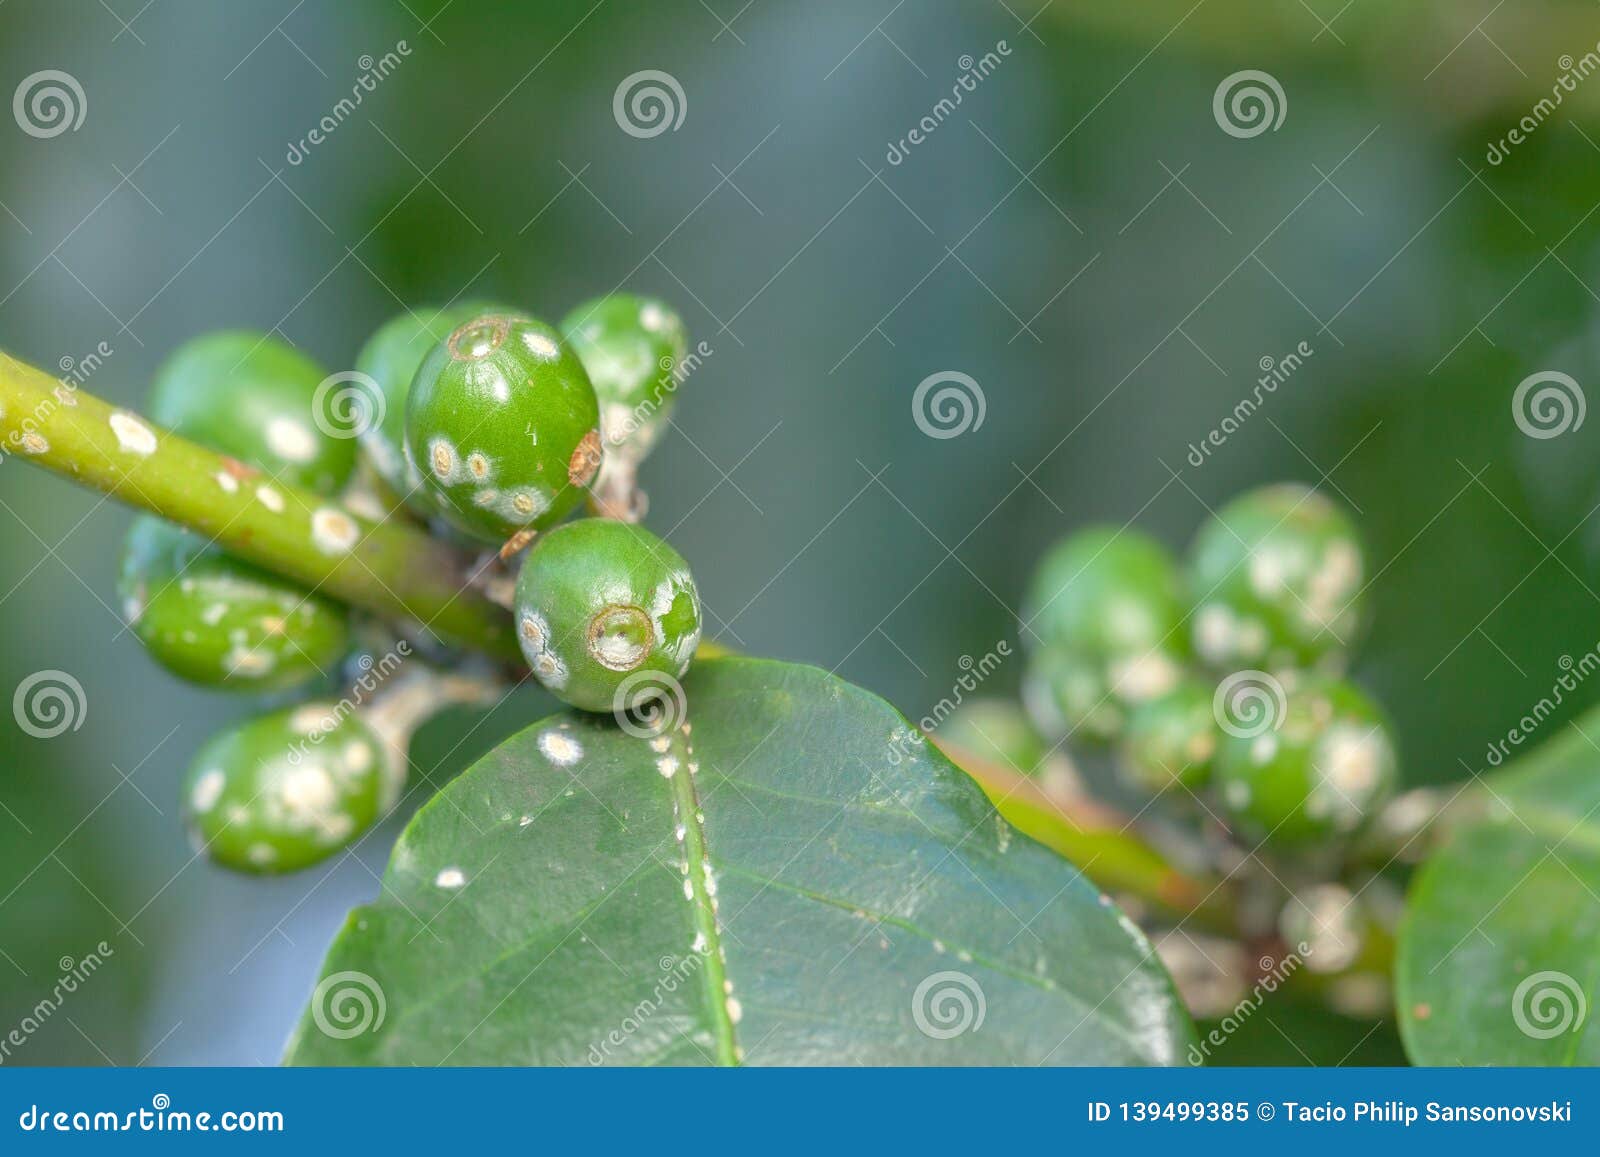 coffee bean green fruits closeup with cochineal plague - not mature - coffea arabica